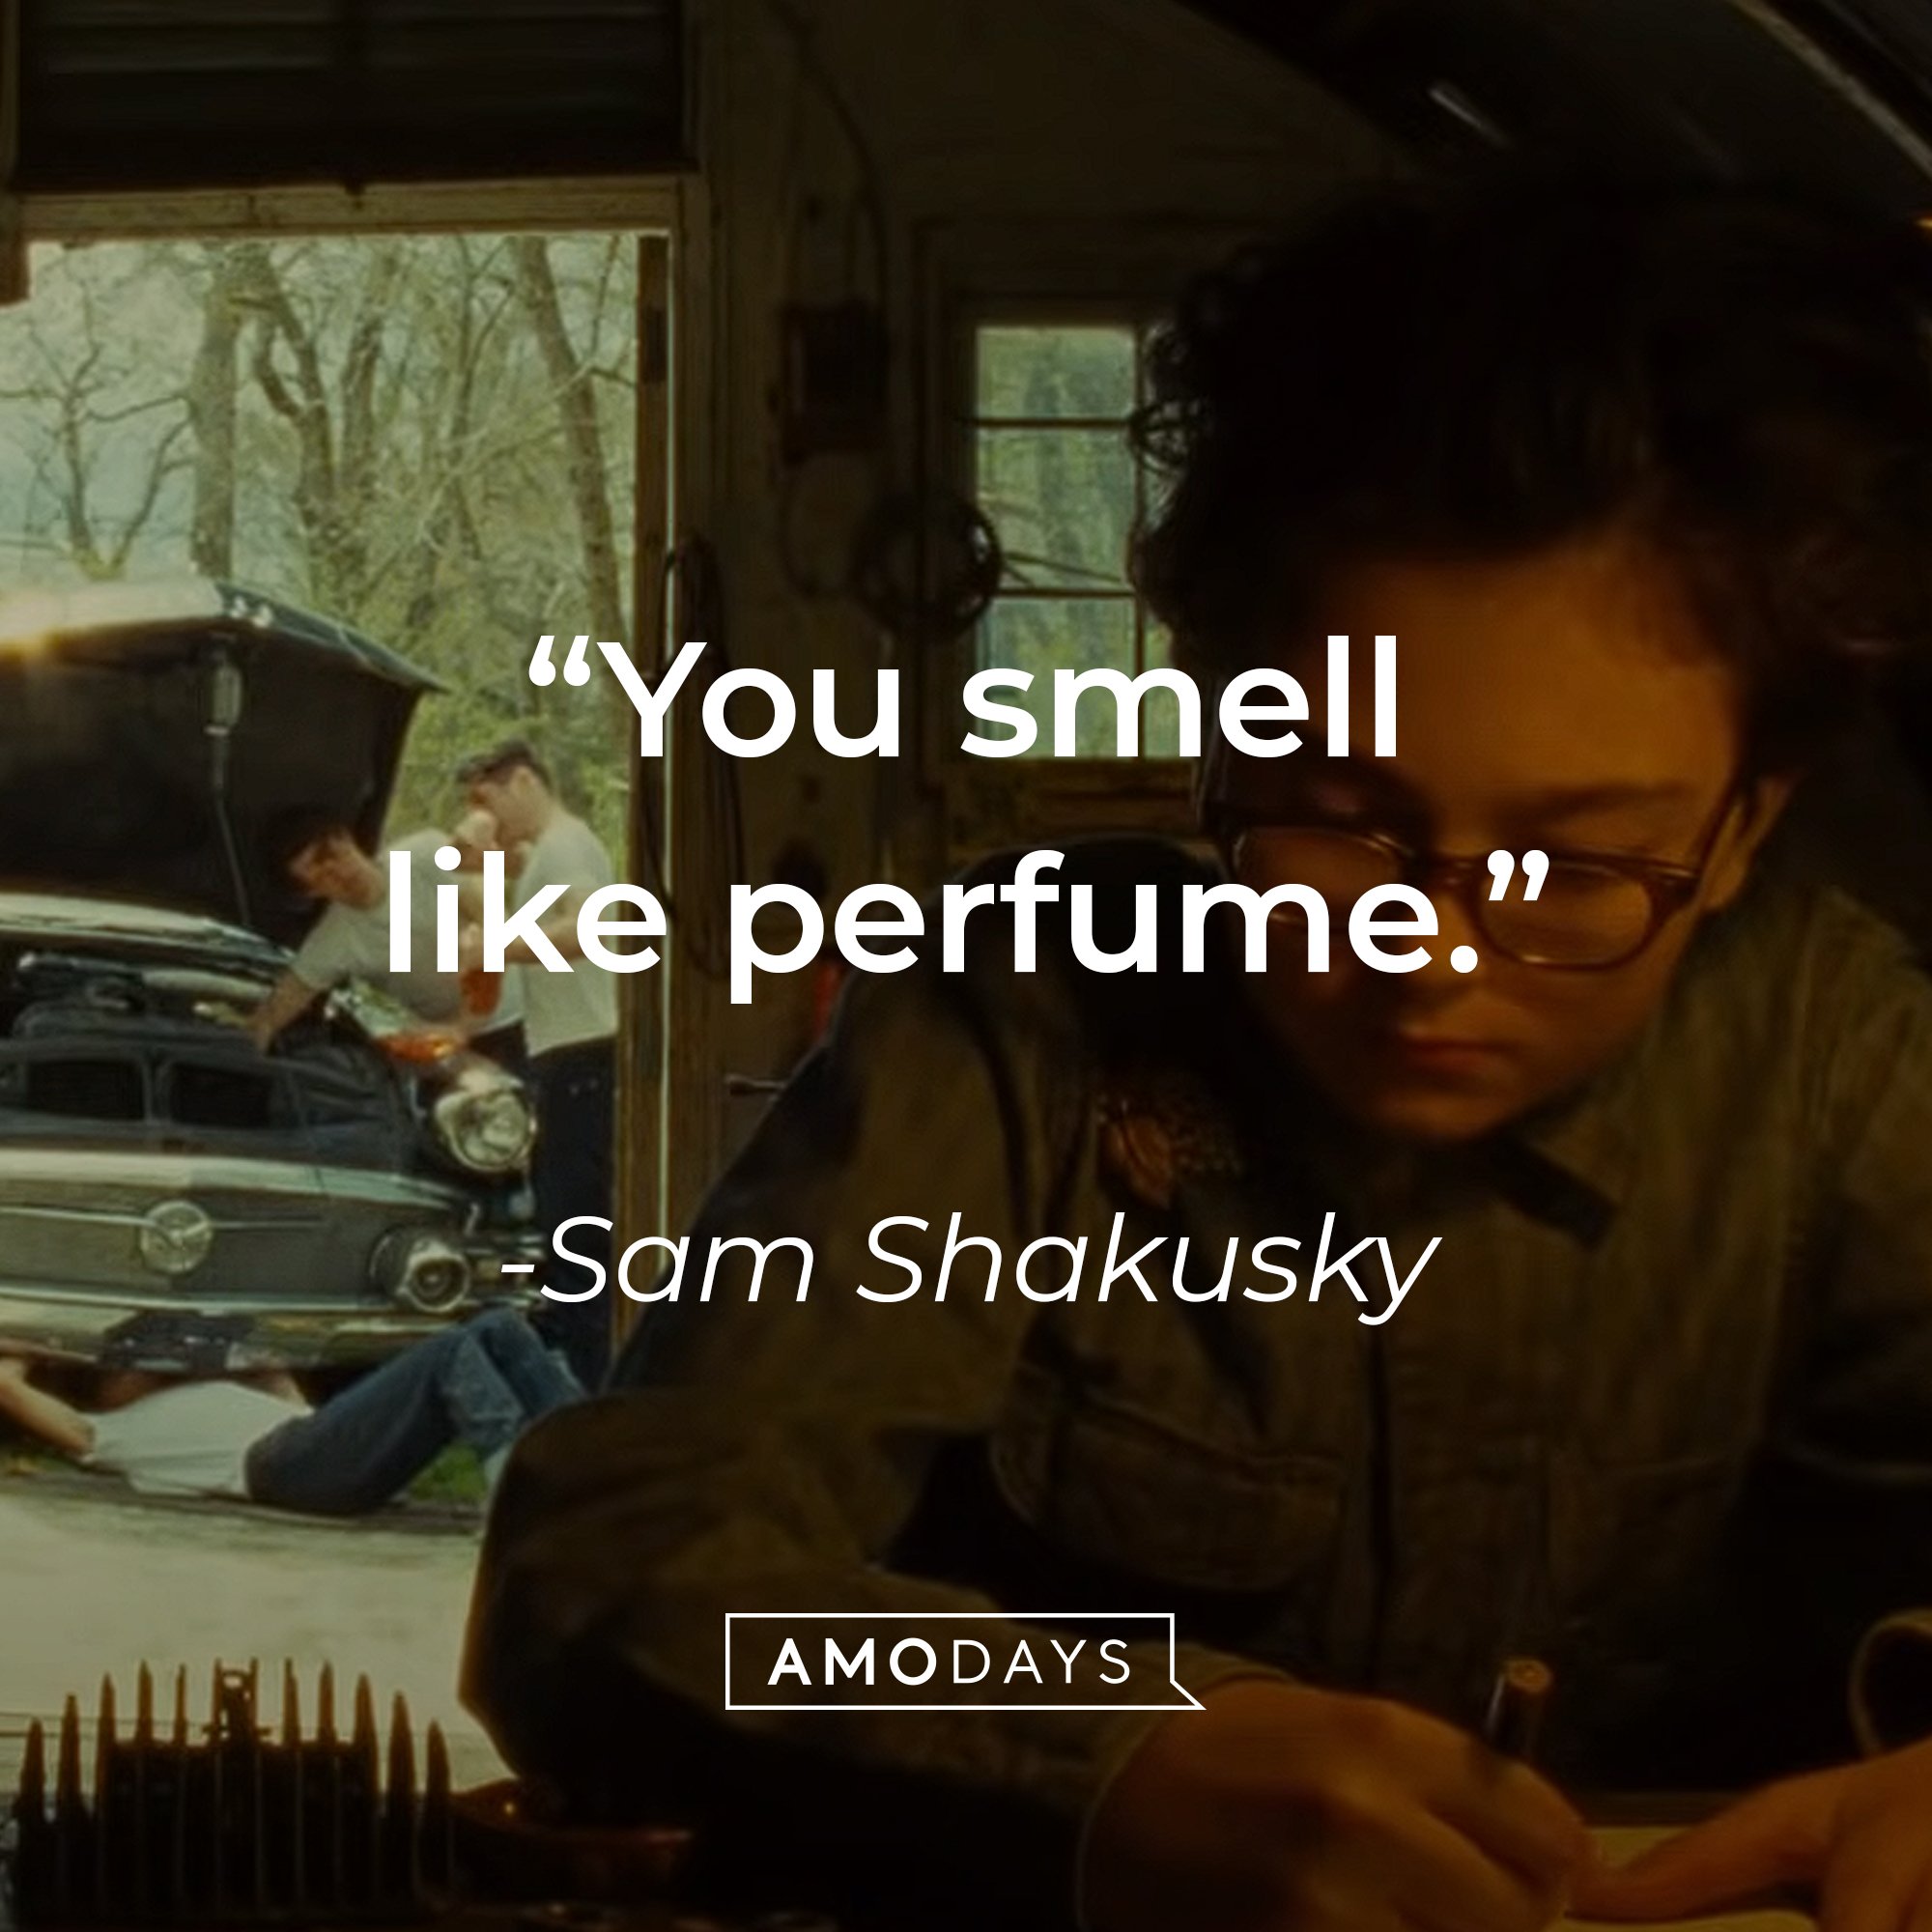 Sam Shakusky's quote: "You smell like perfume." | Image: AmoDays